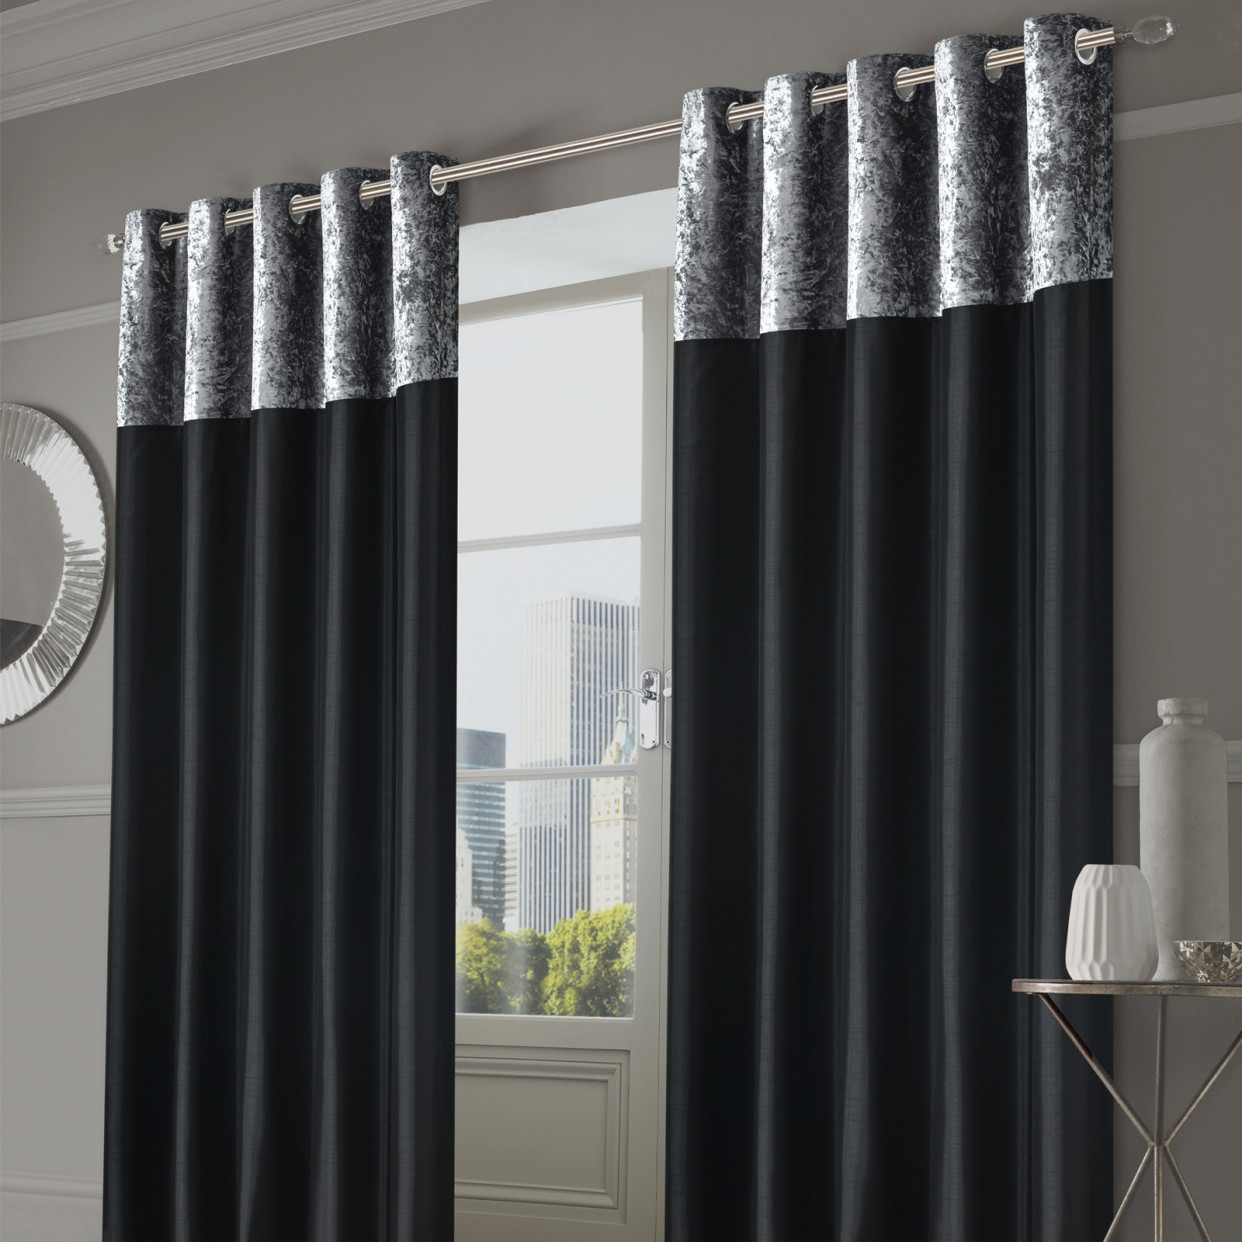 Sienna Home Manhattan Crushed Velvet Band Eyelet Curtains - Black, 66" x 54">